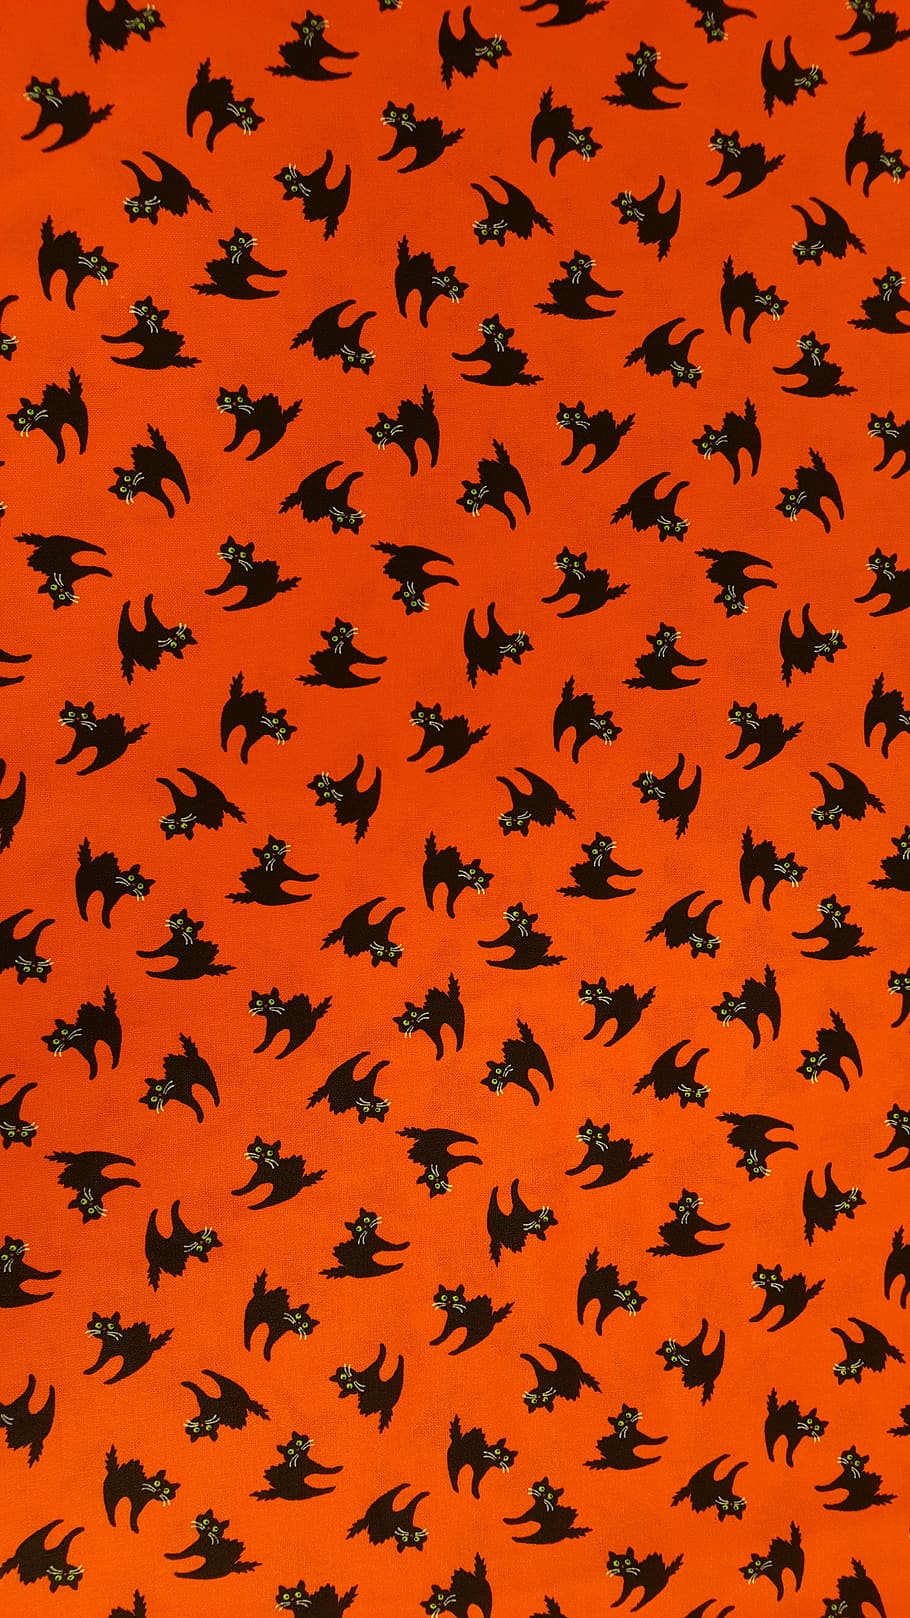 orange, background, cat-printed textile, cats, halloween, holiday, design, horror, autumn, black